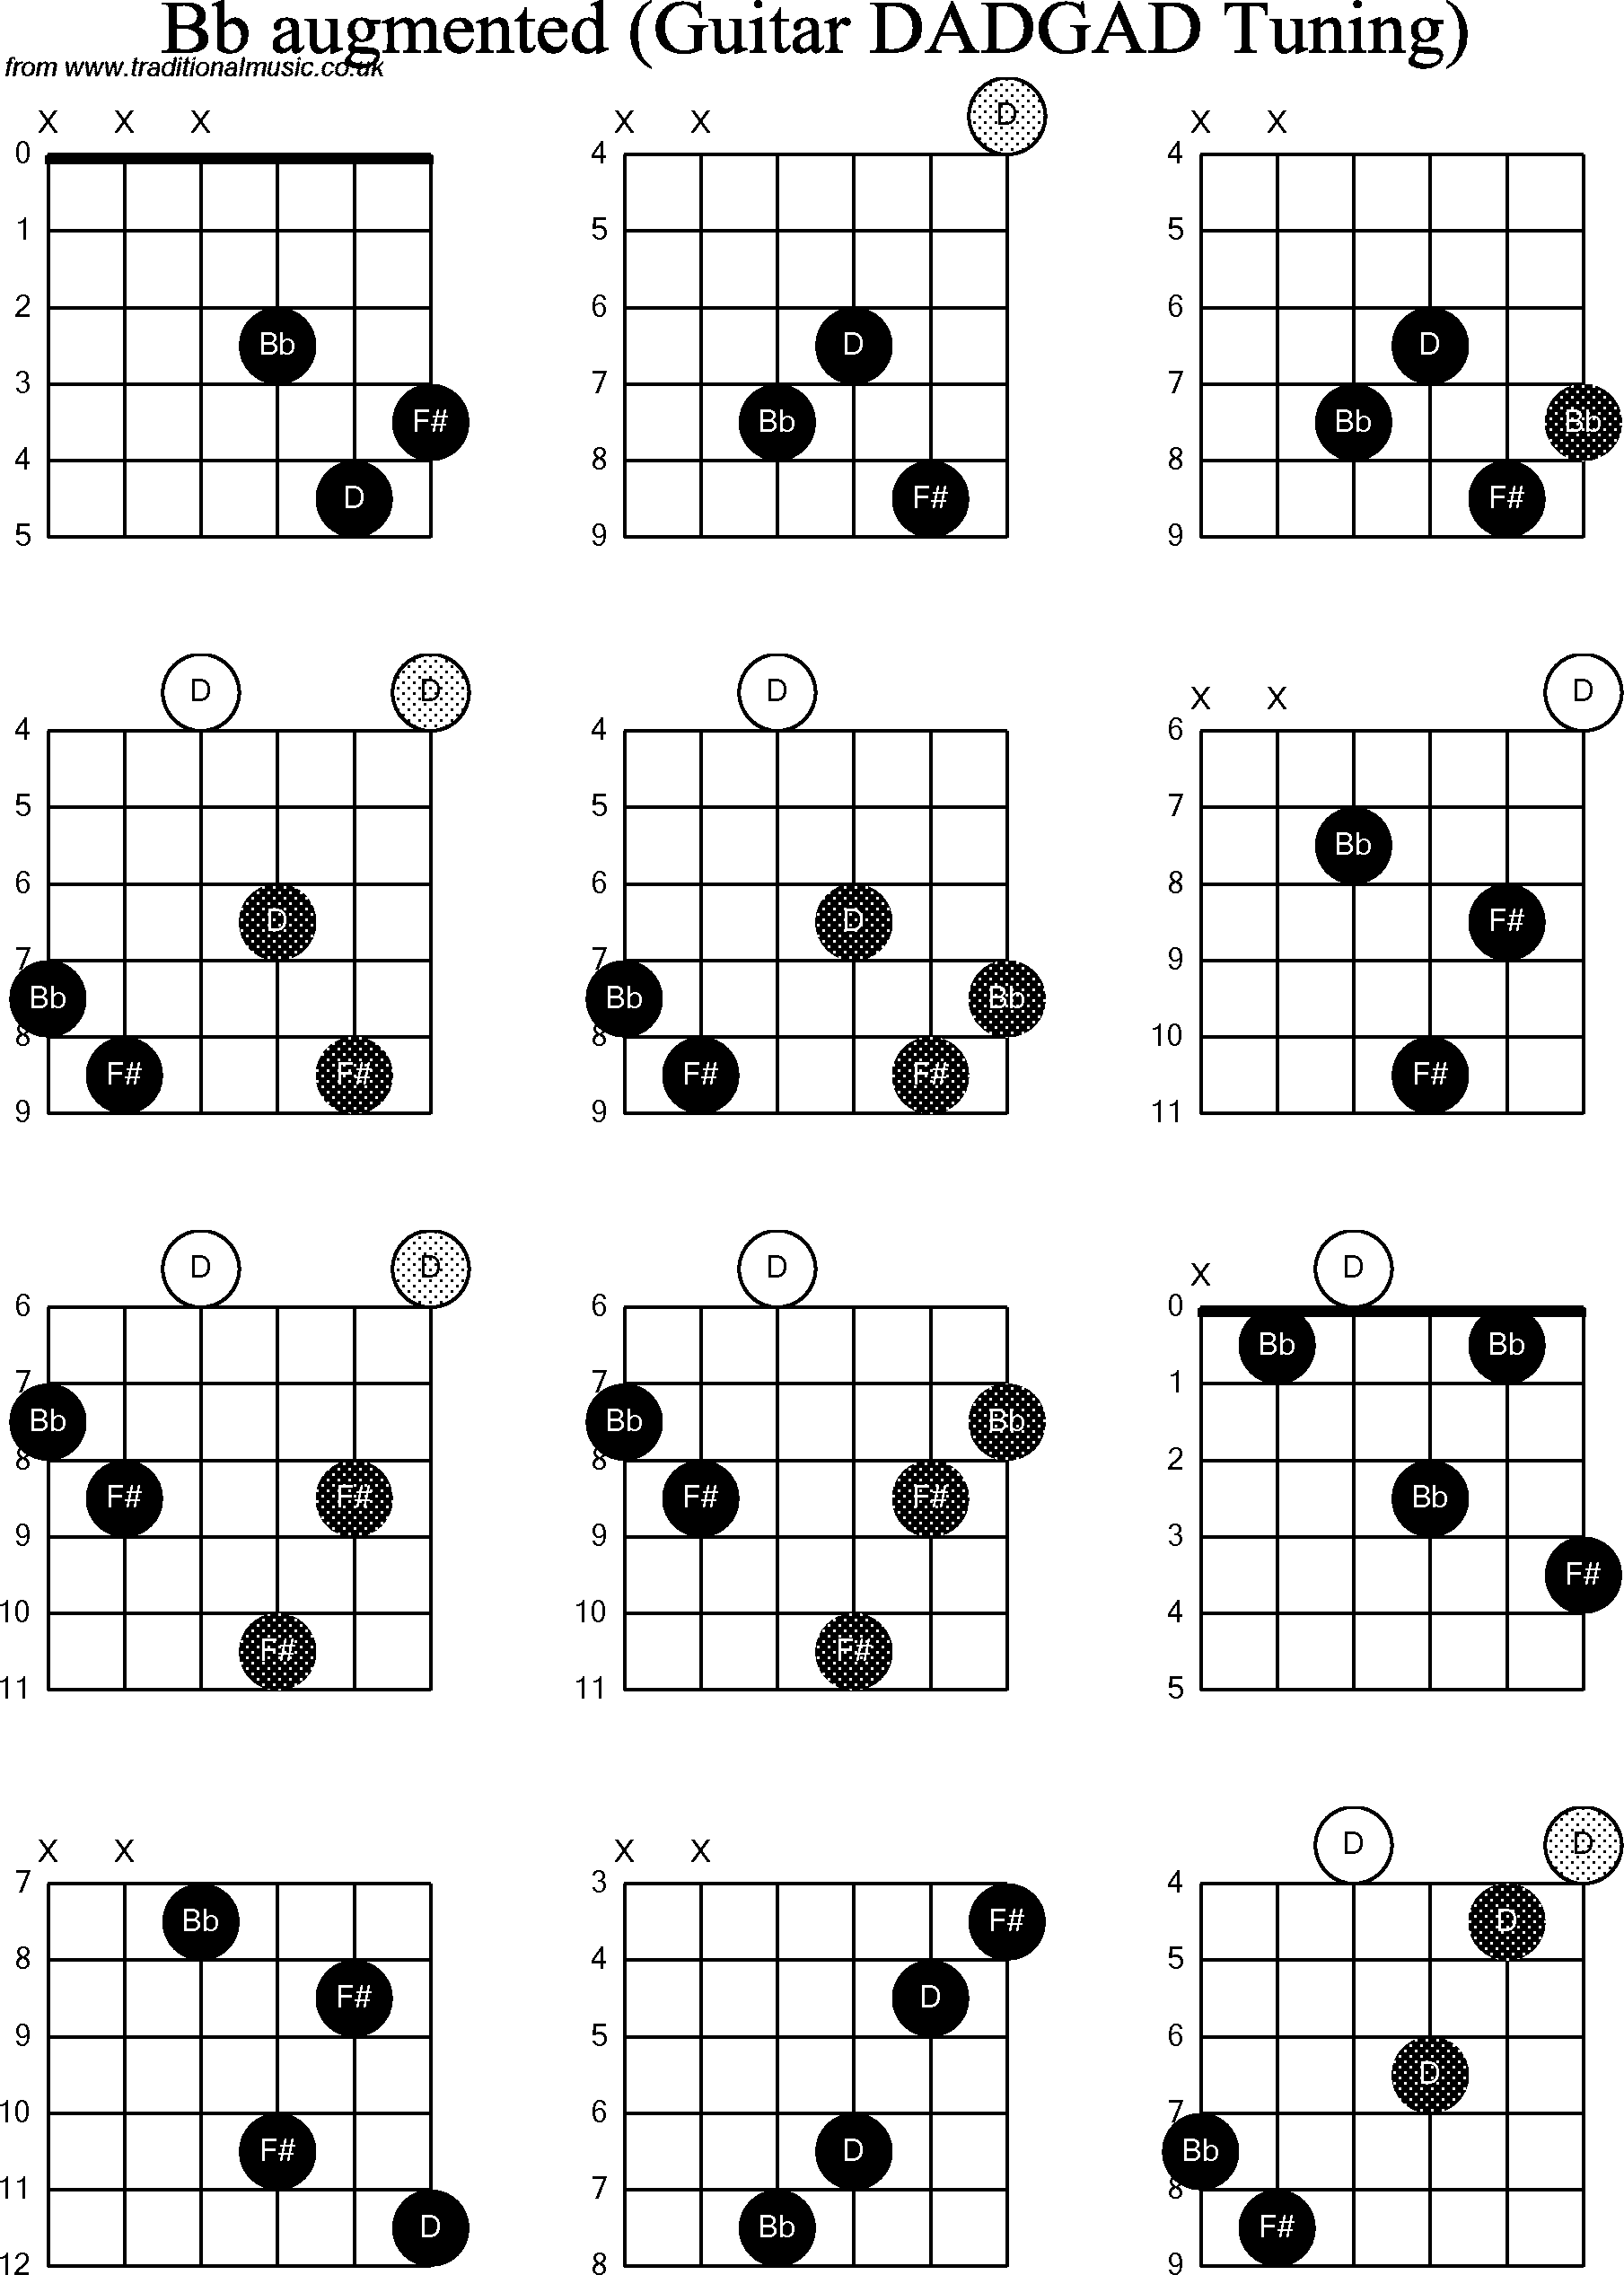 Chord Diagrams for D Modal Guitar(DADGAD), Bb Augmented